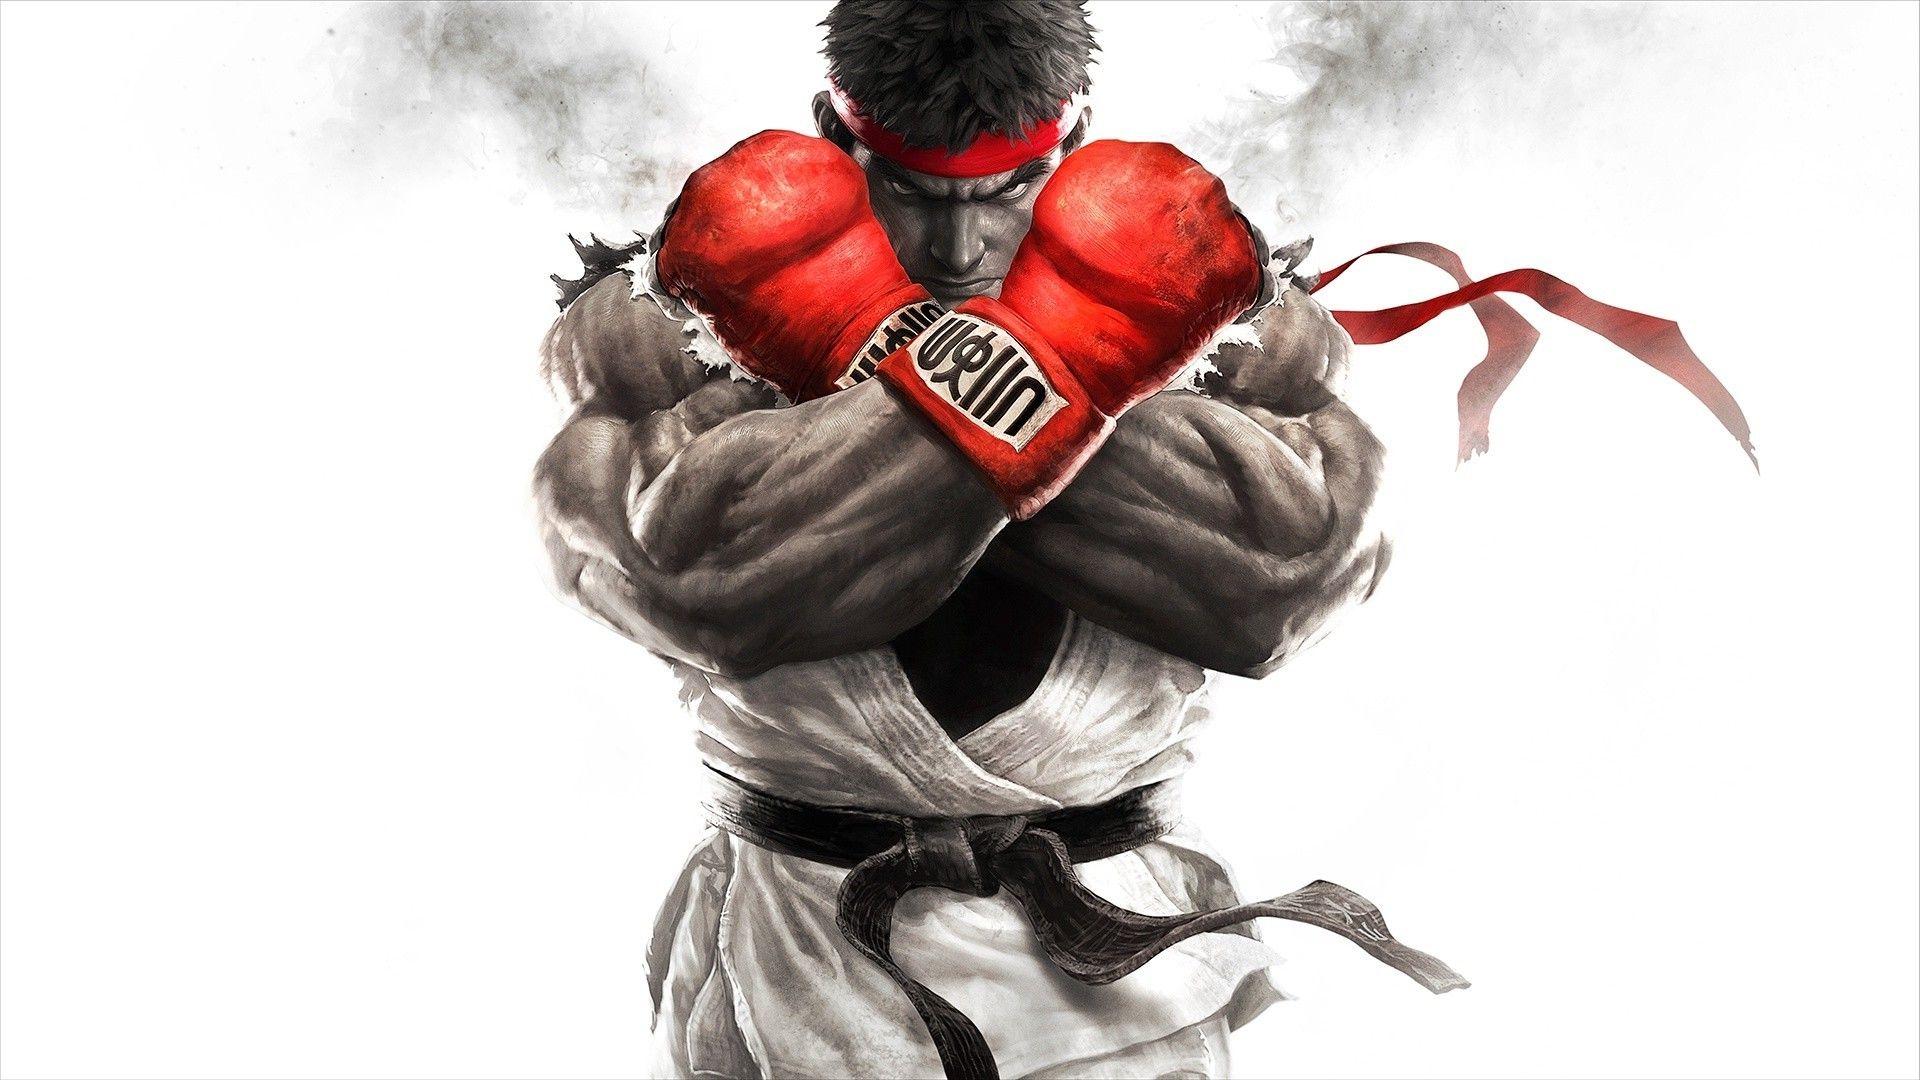 Games Ryu Street Fighter 5 wallpaper Desktop, Phone, Tablet